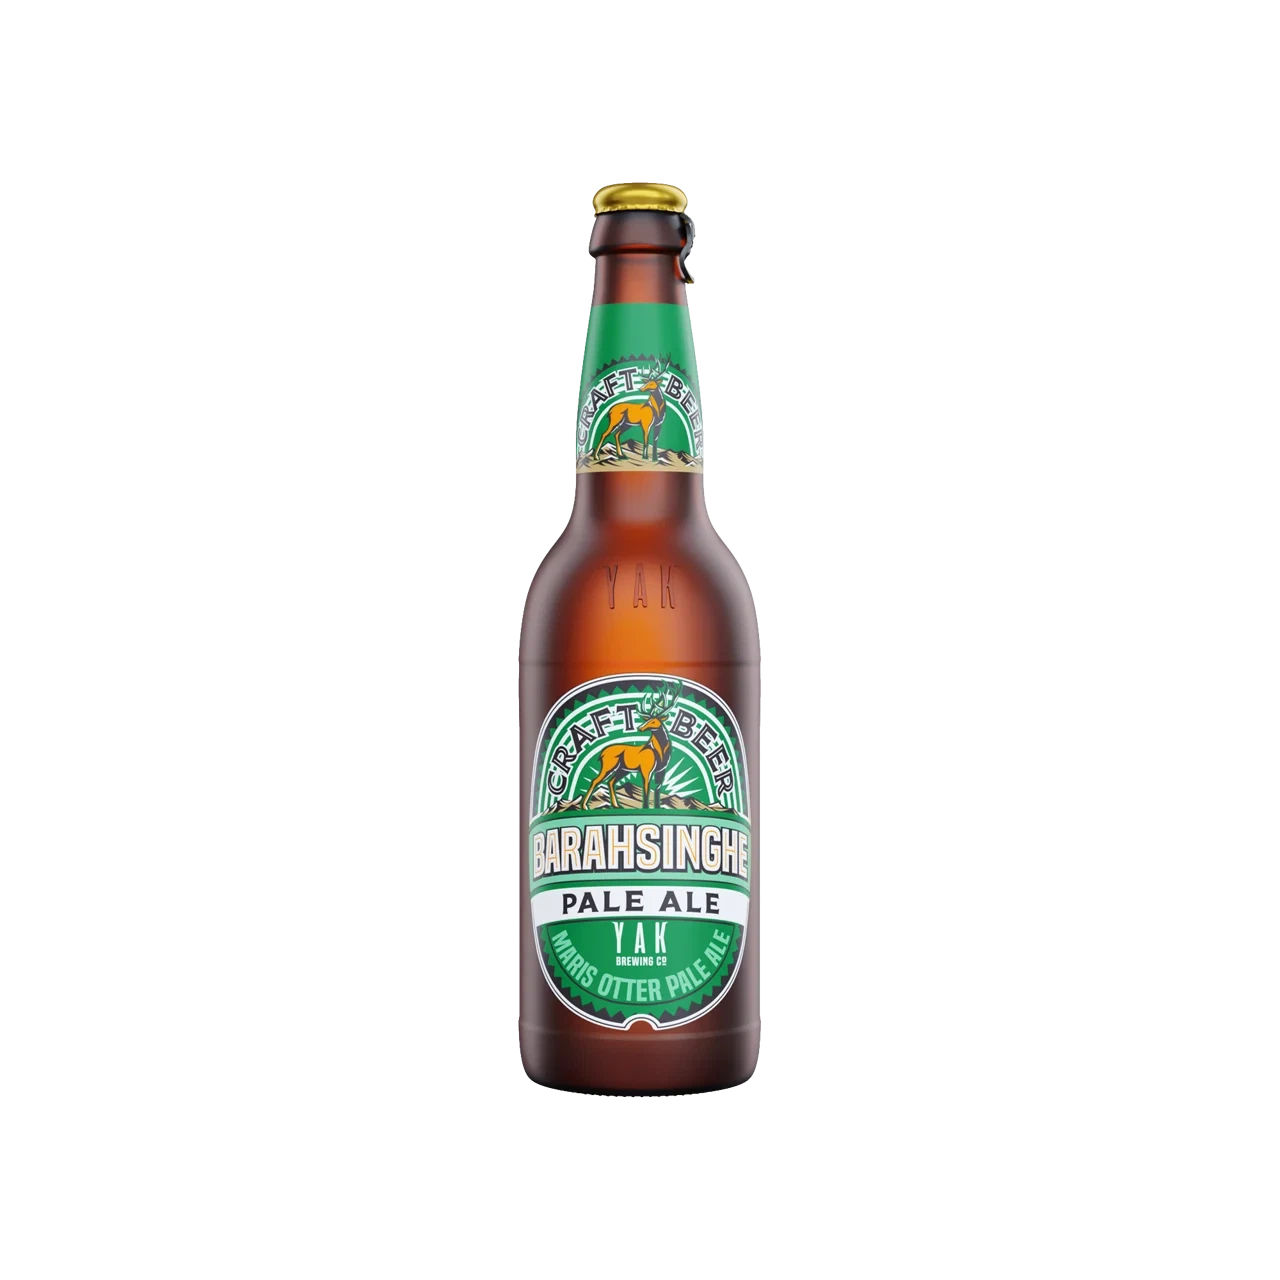 Barahsinghe Pale Ale Beer 330ml (24x330ml)